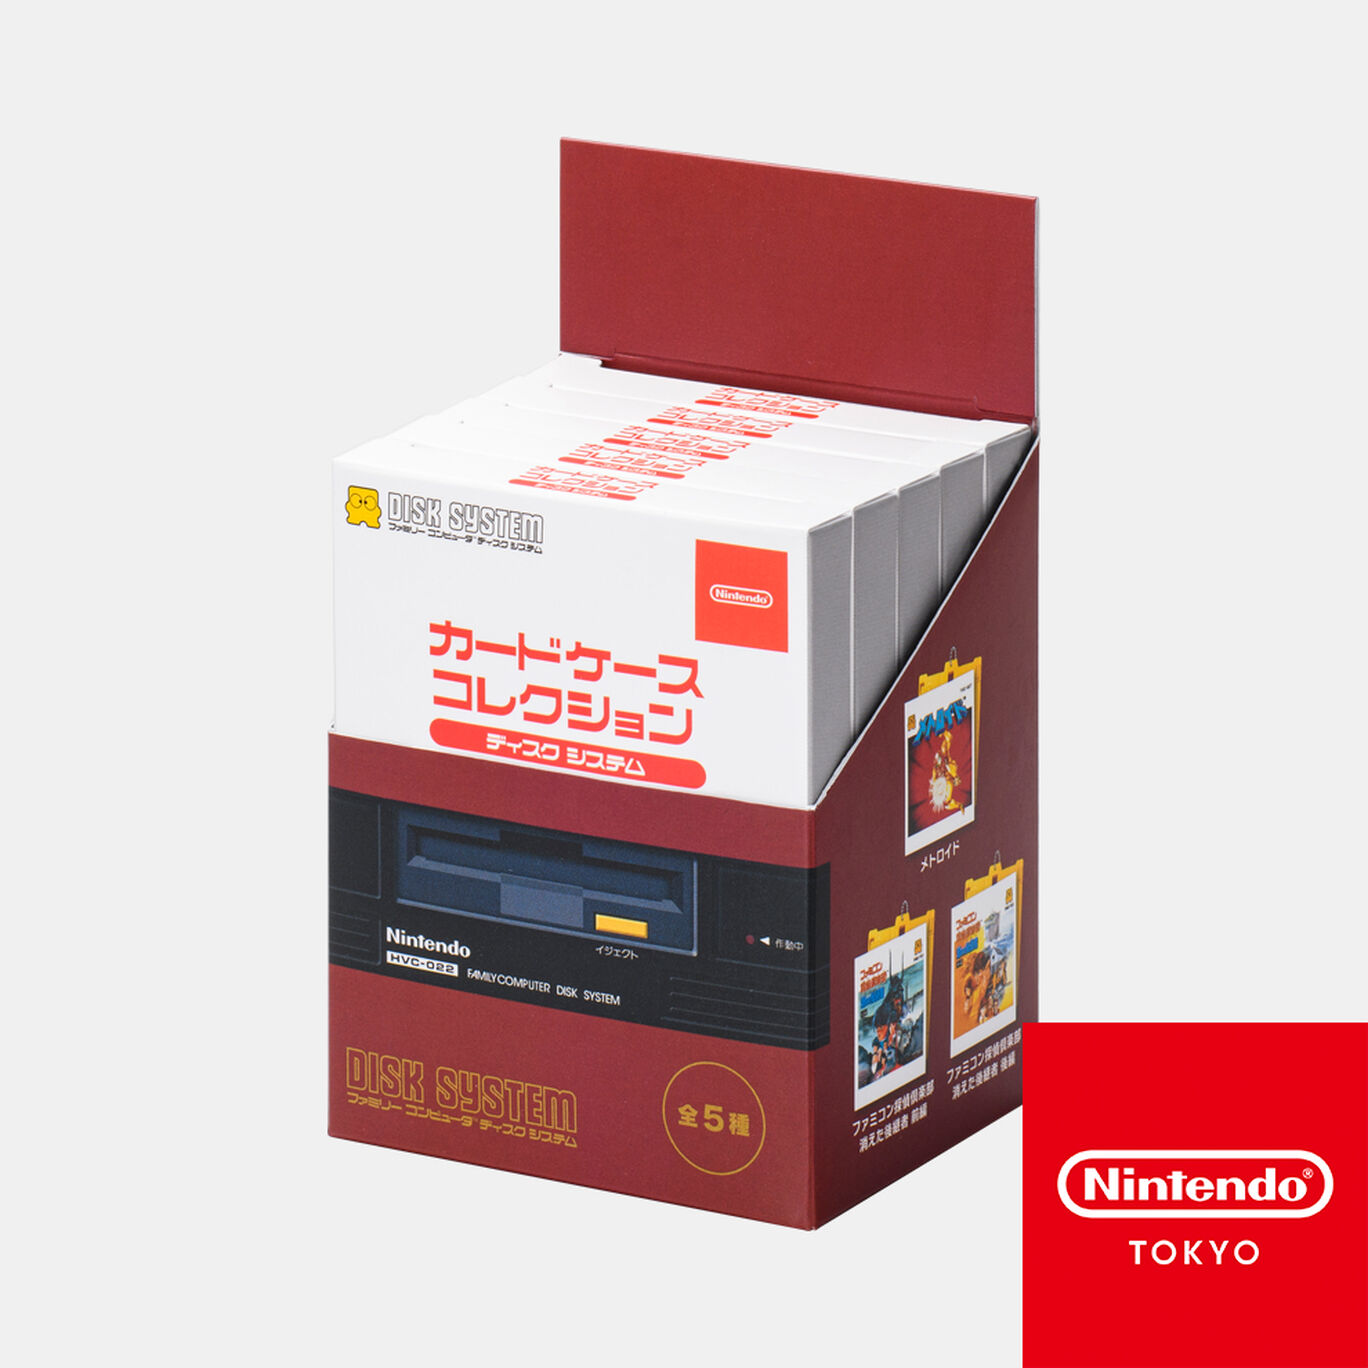 【BOX商品】カードケースコレクション ディスクシステム【Nintendo TOKYO/OSAKA取り扱い商品】